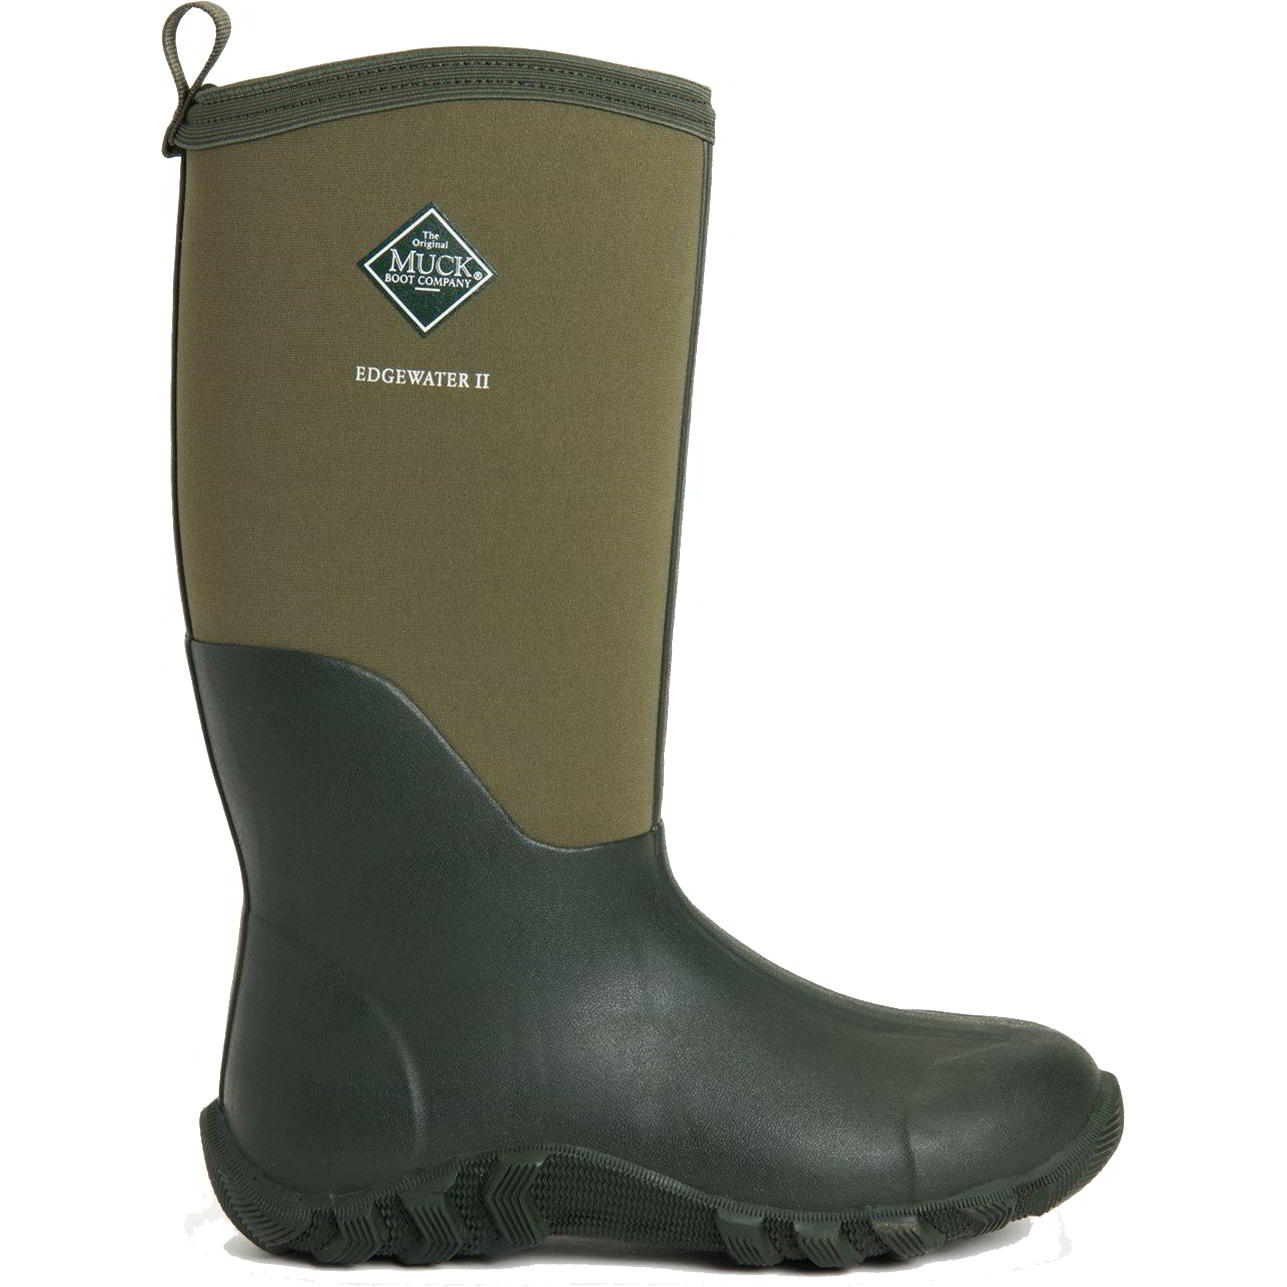 Muck Boots Men's Edgewater II Neoprene Wellies Rain Boots - UK 7